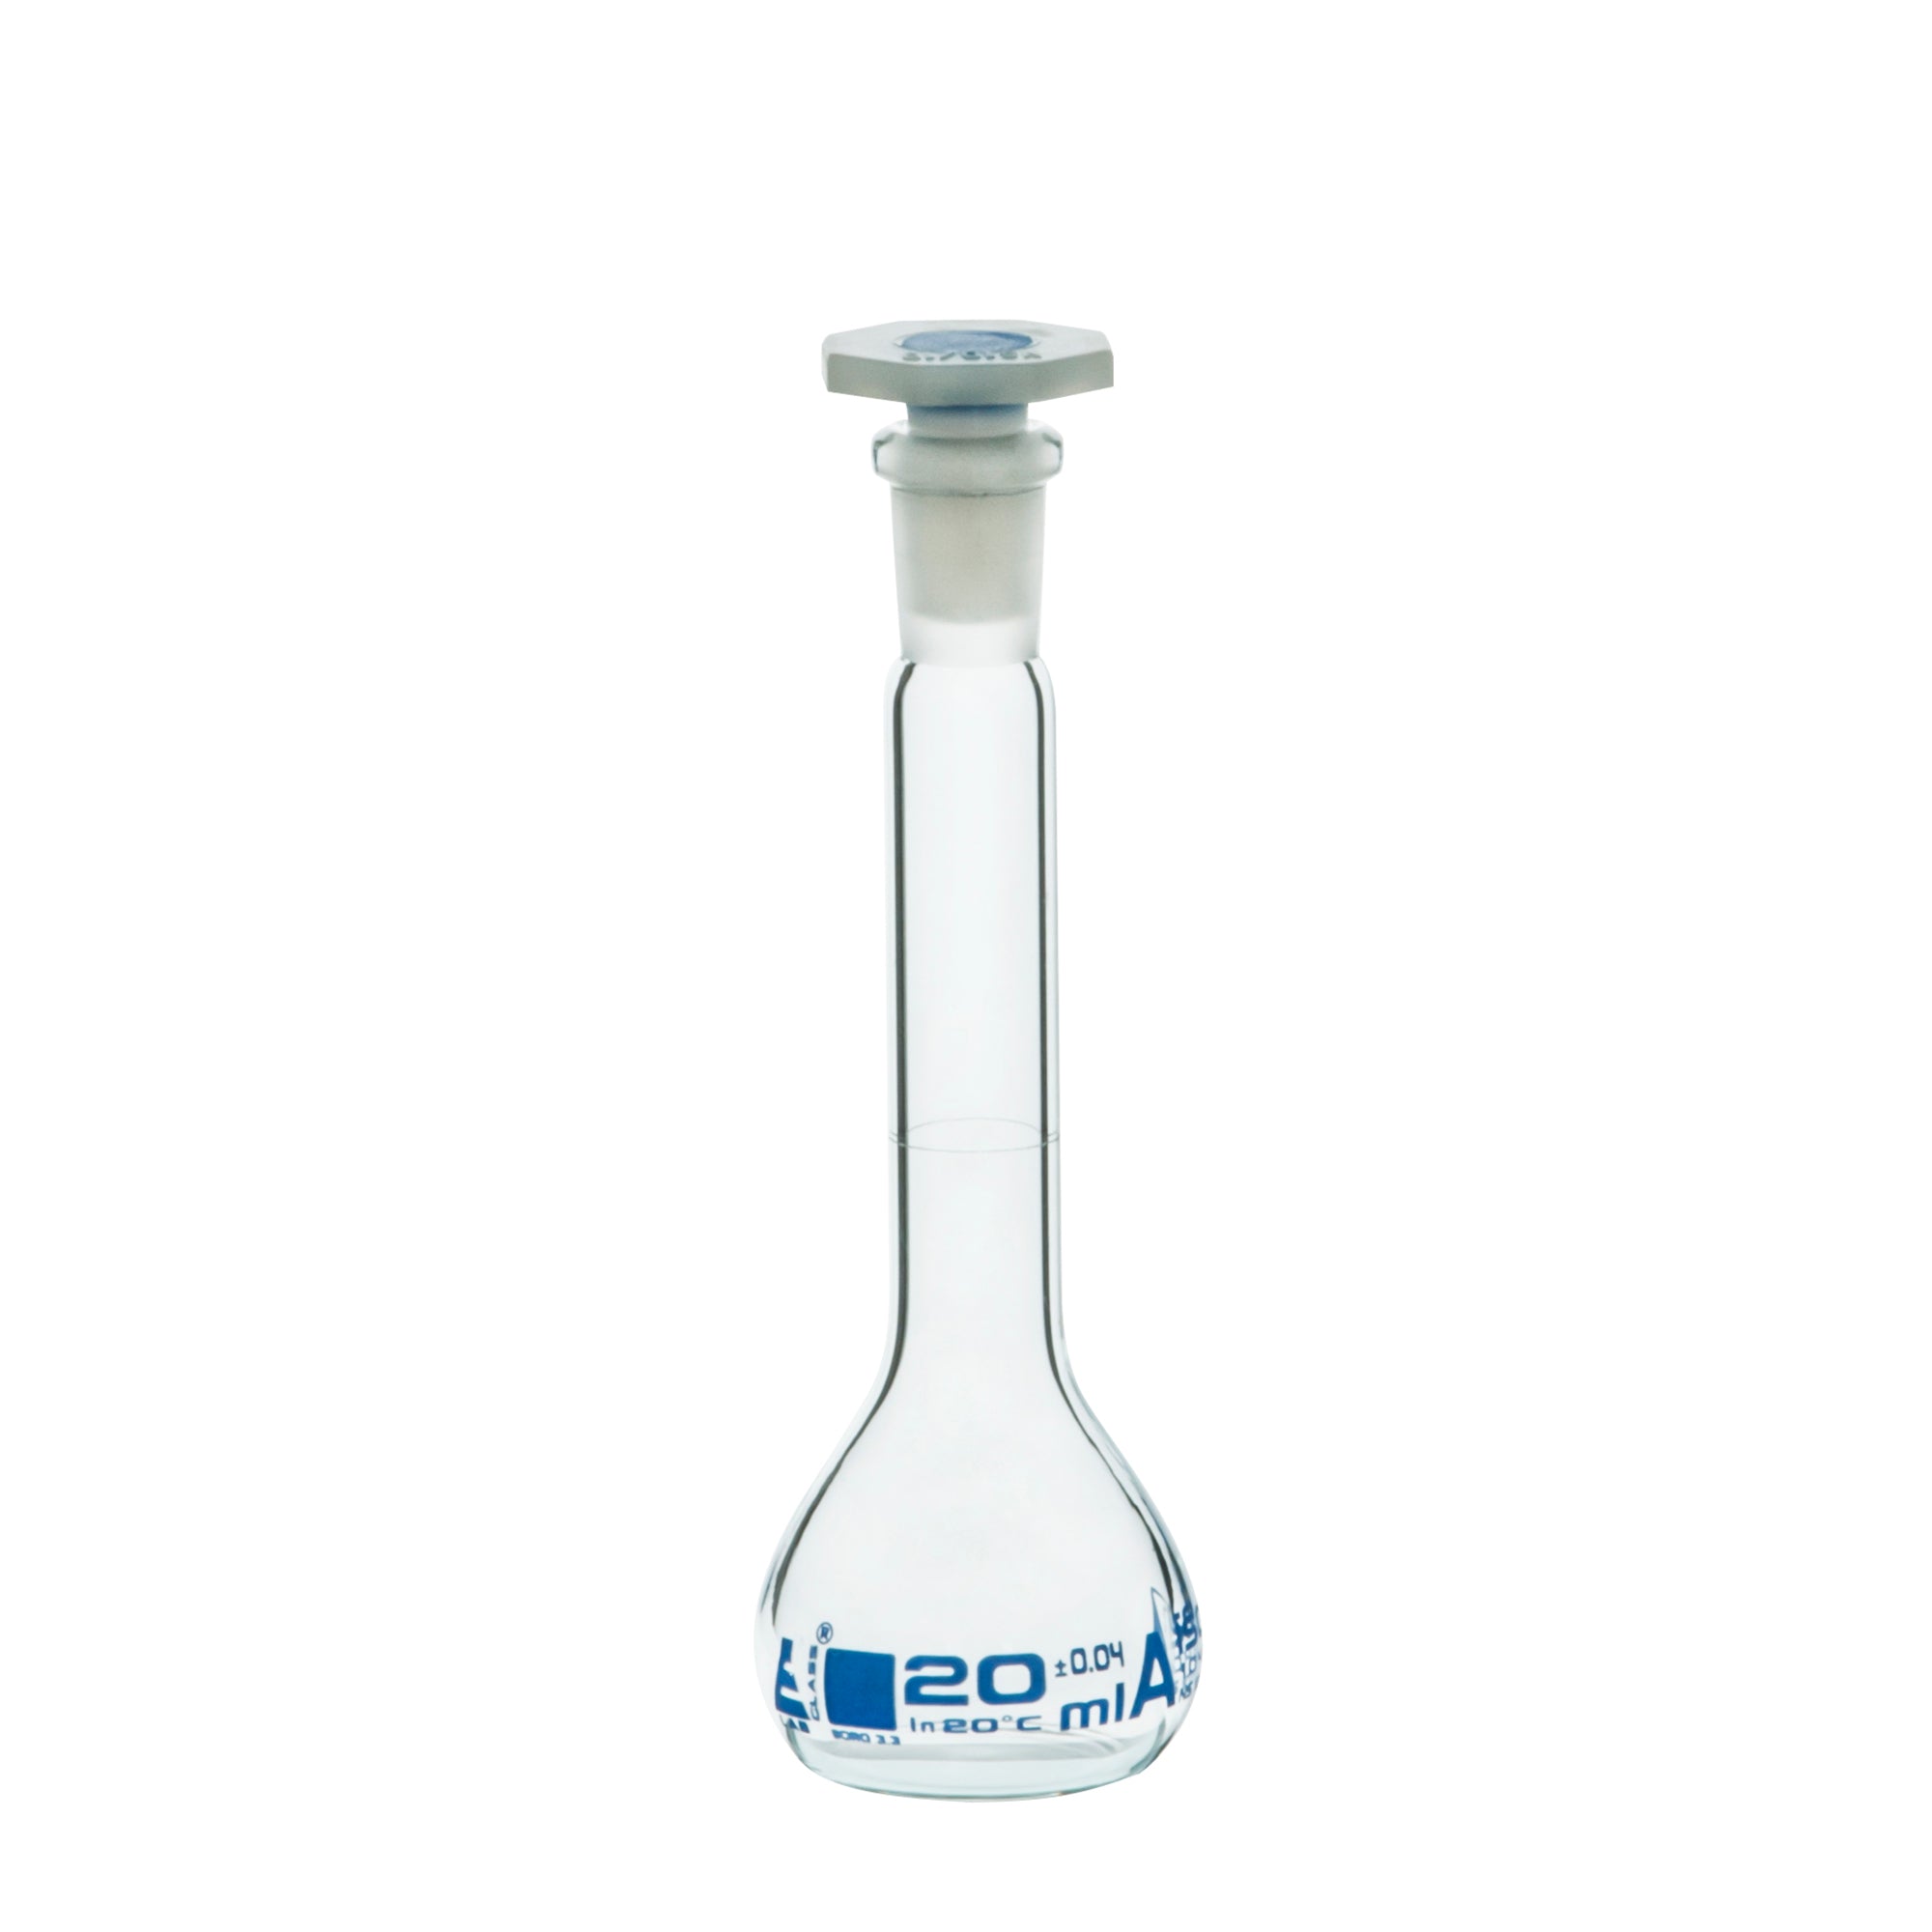 Borosilicate Glass Volumetric Flask with Polyethylene Stopper, 20ml, Class A, Blue Print, Autoclavable